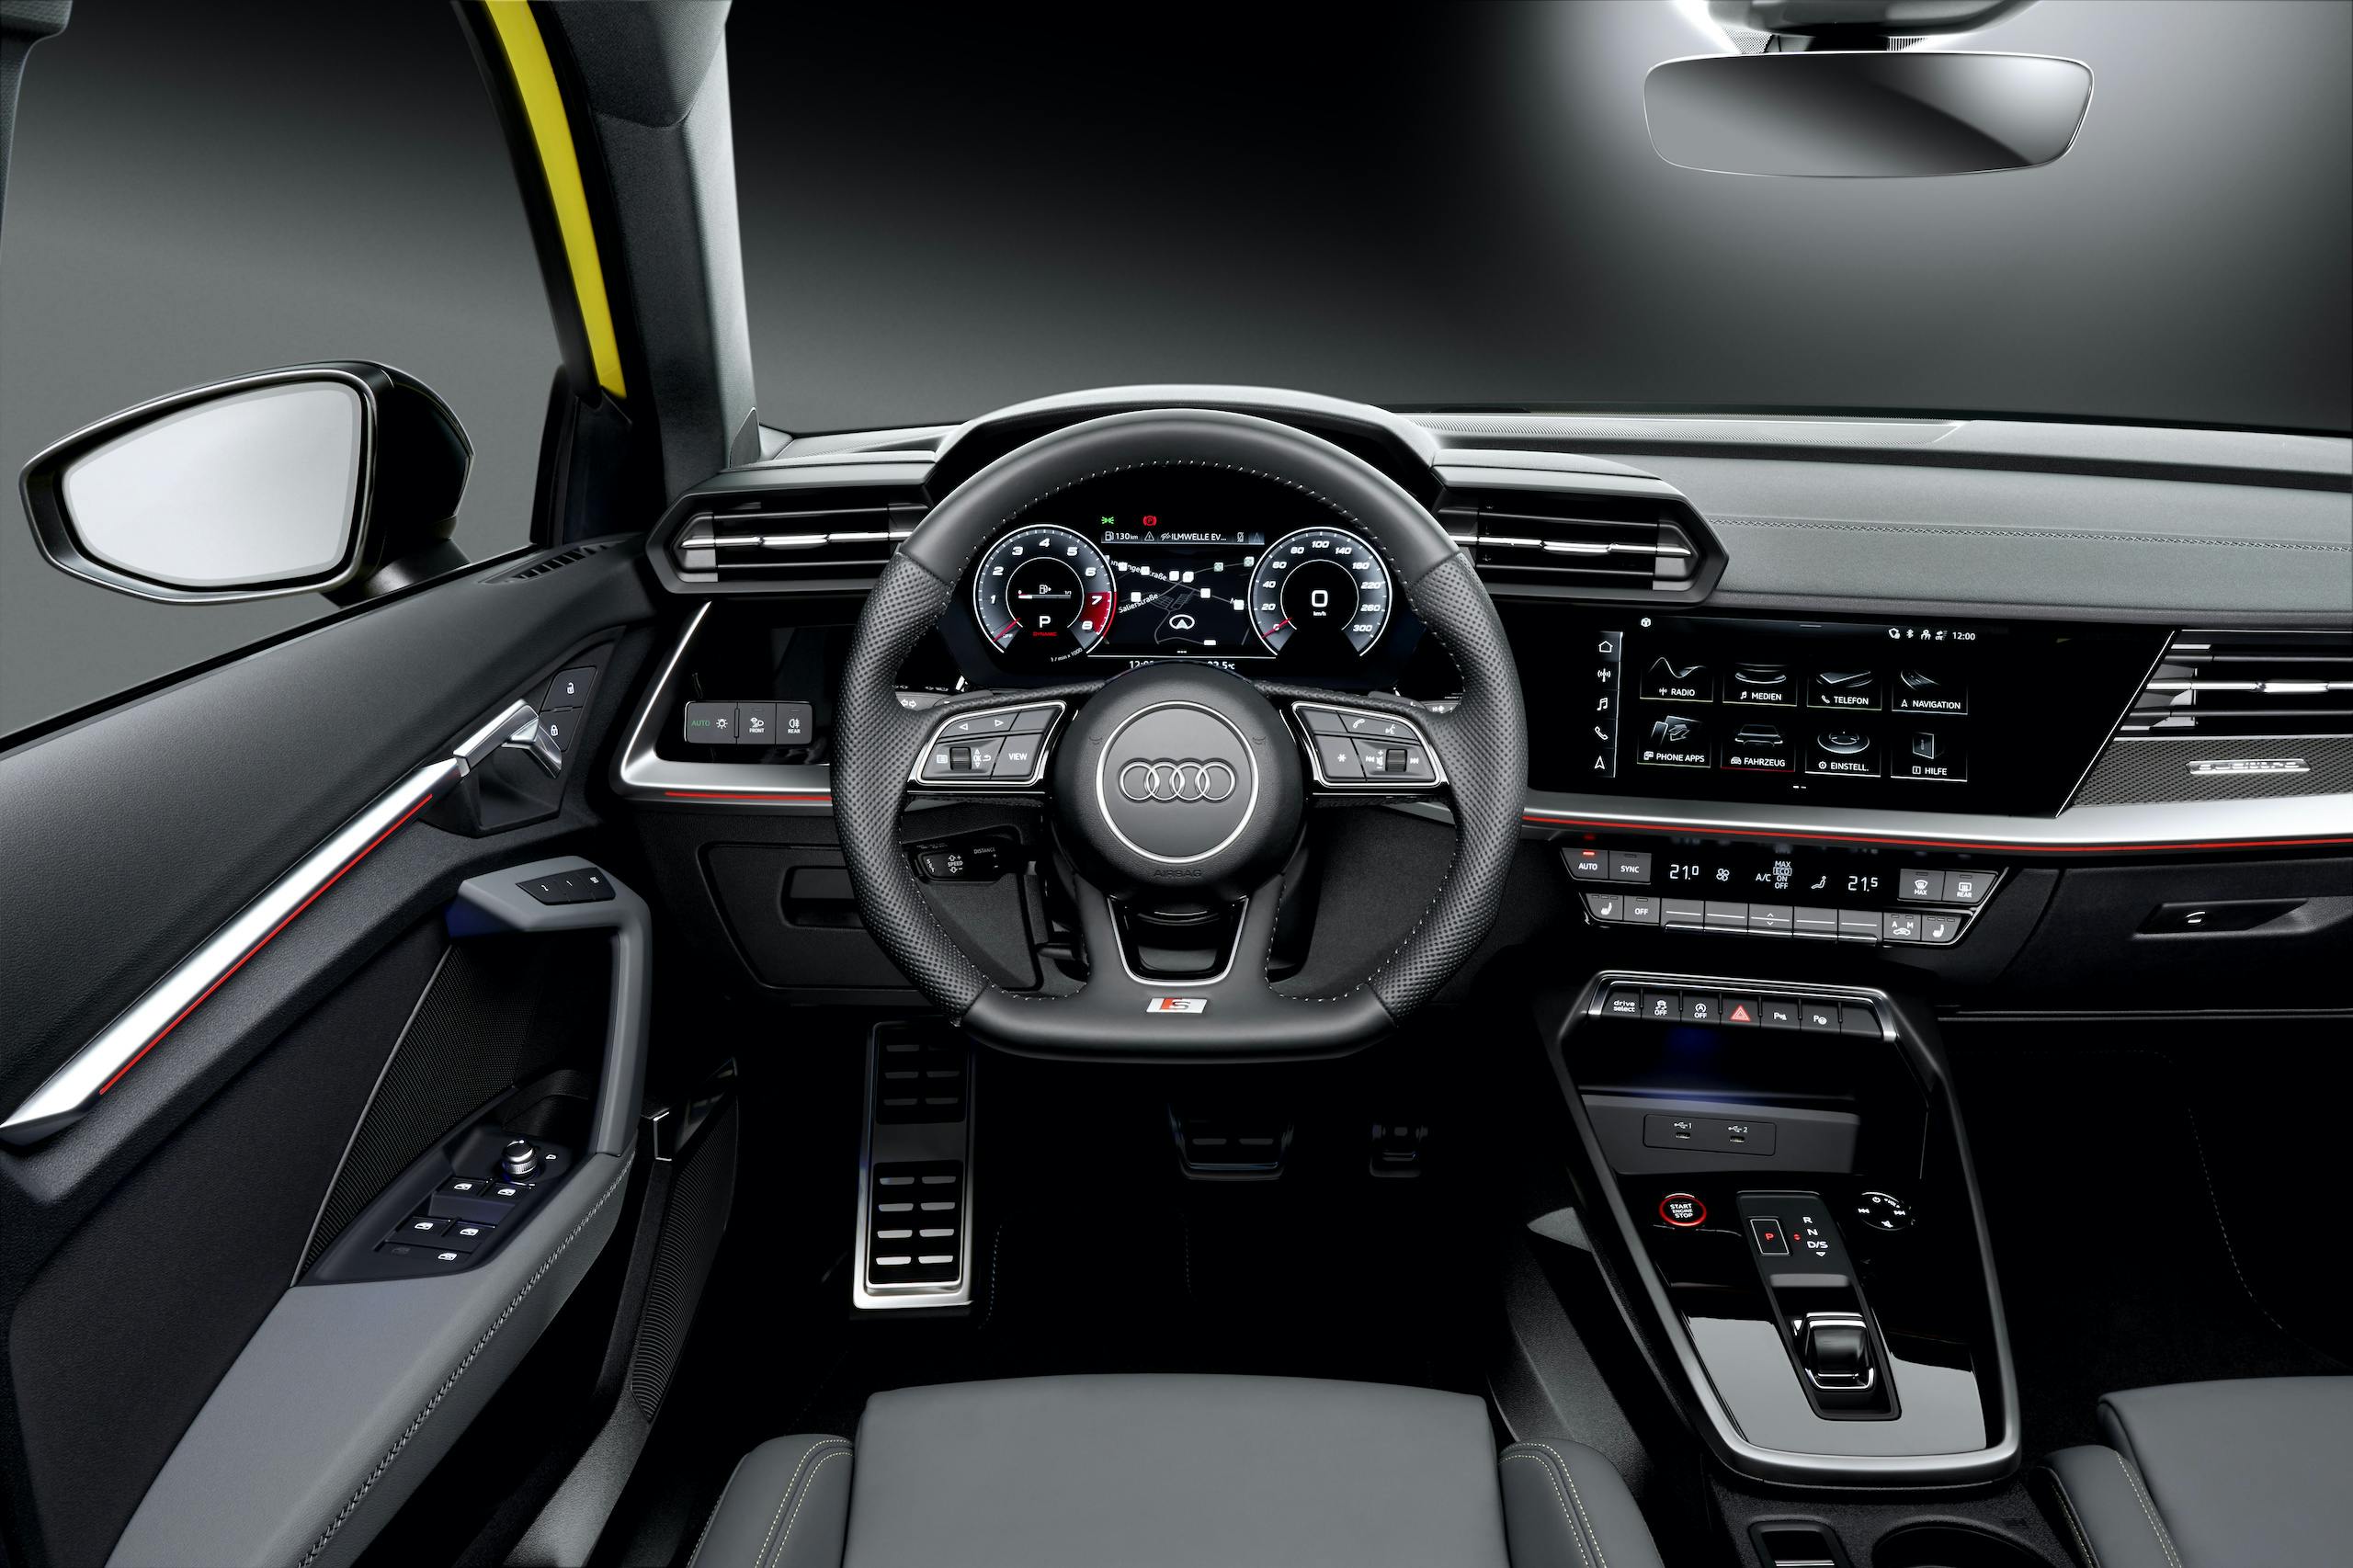 Audi S3 Sportback python yellow black leather interior front